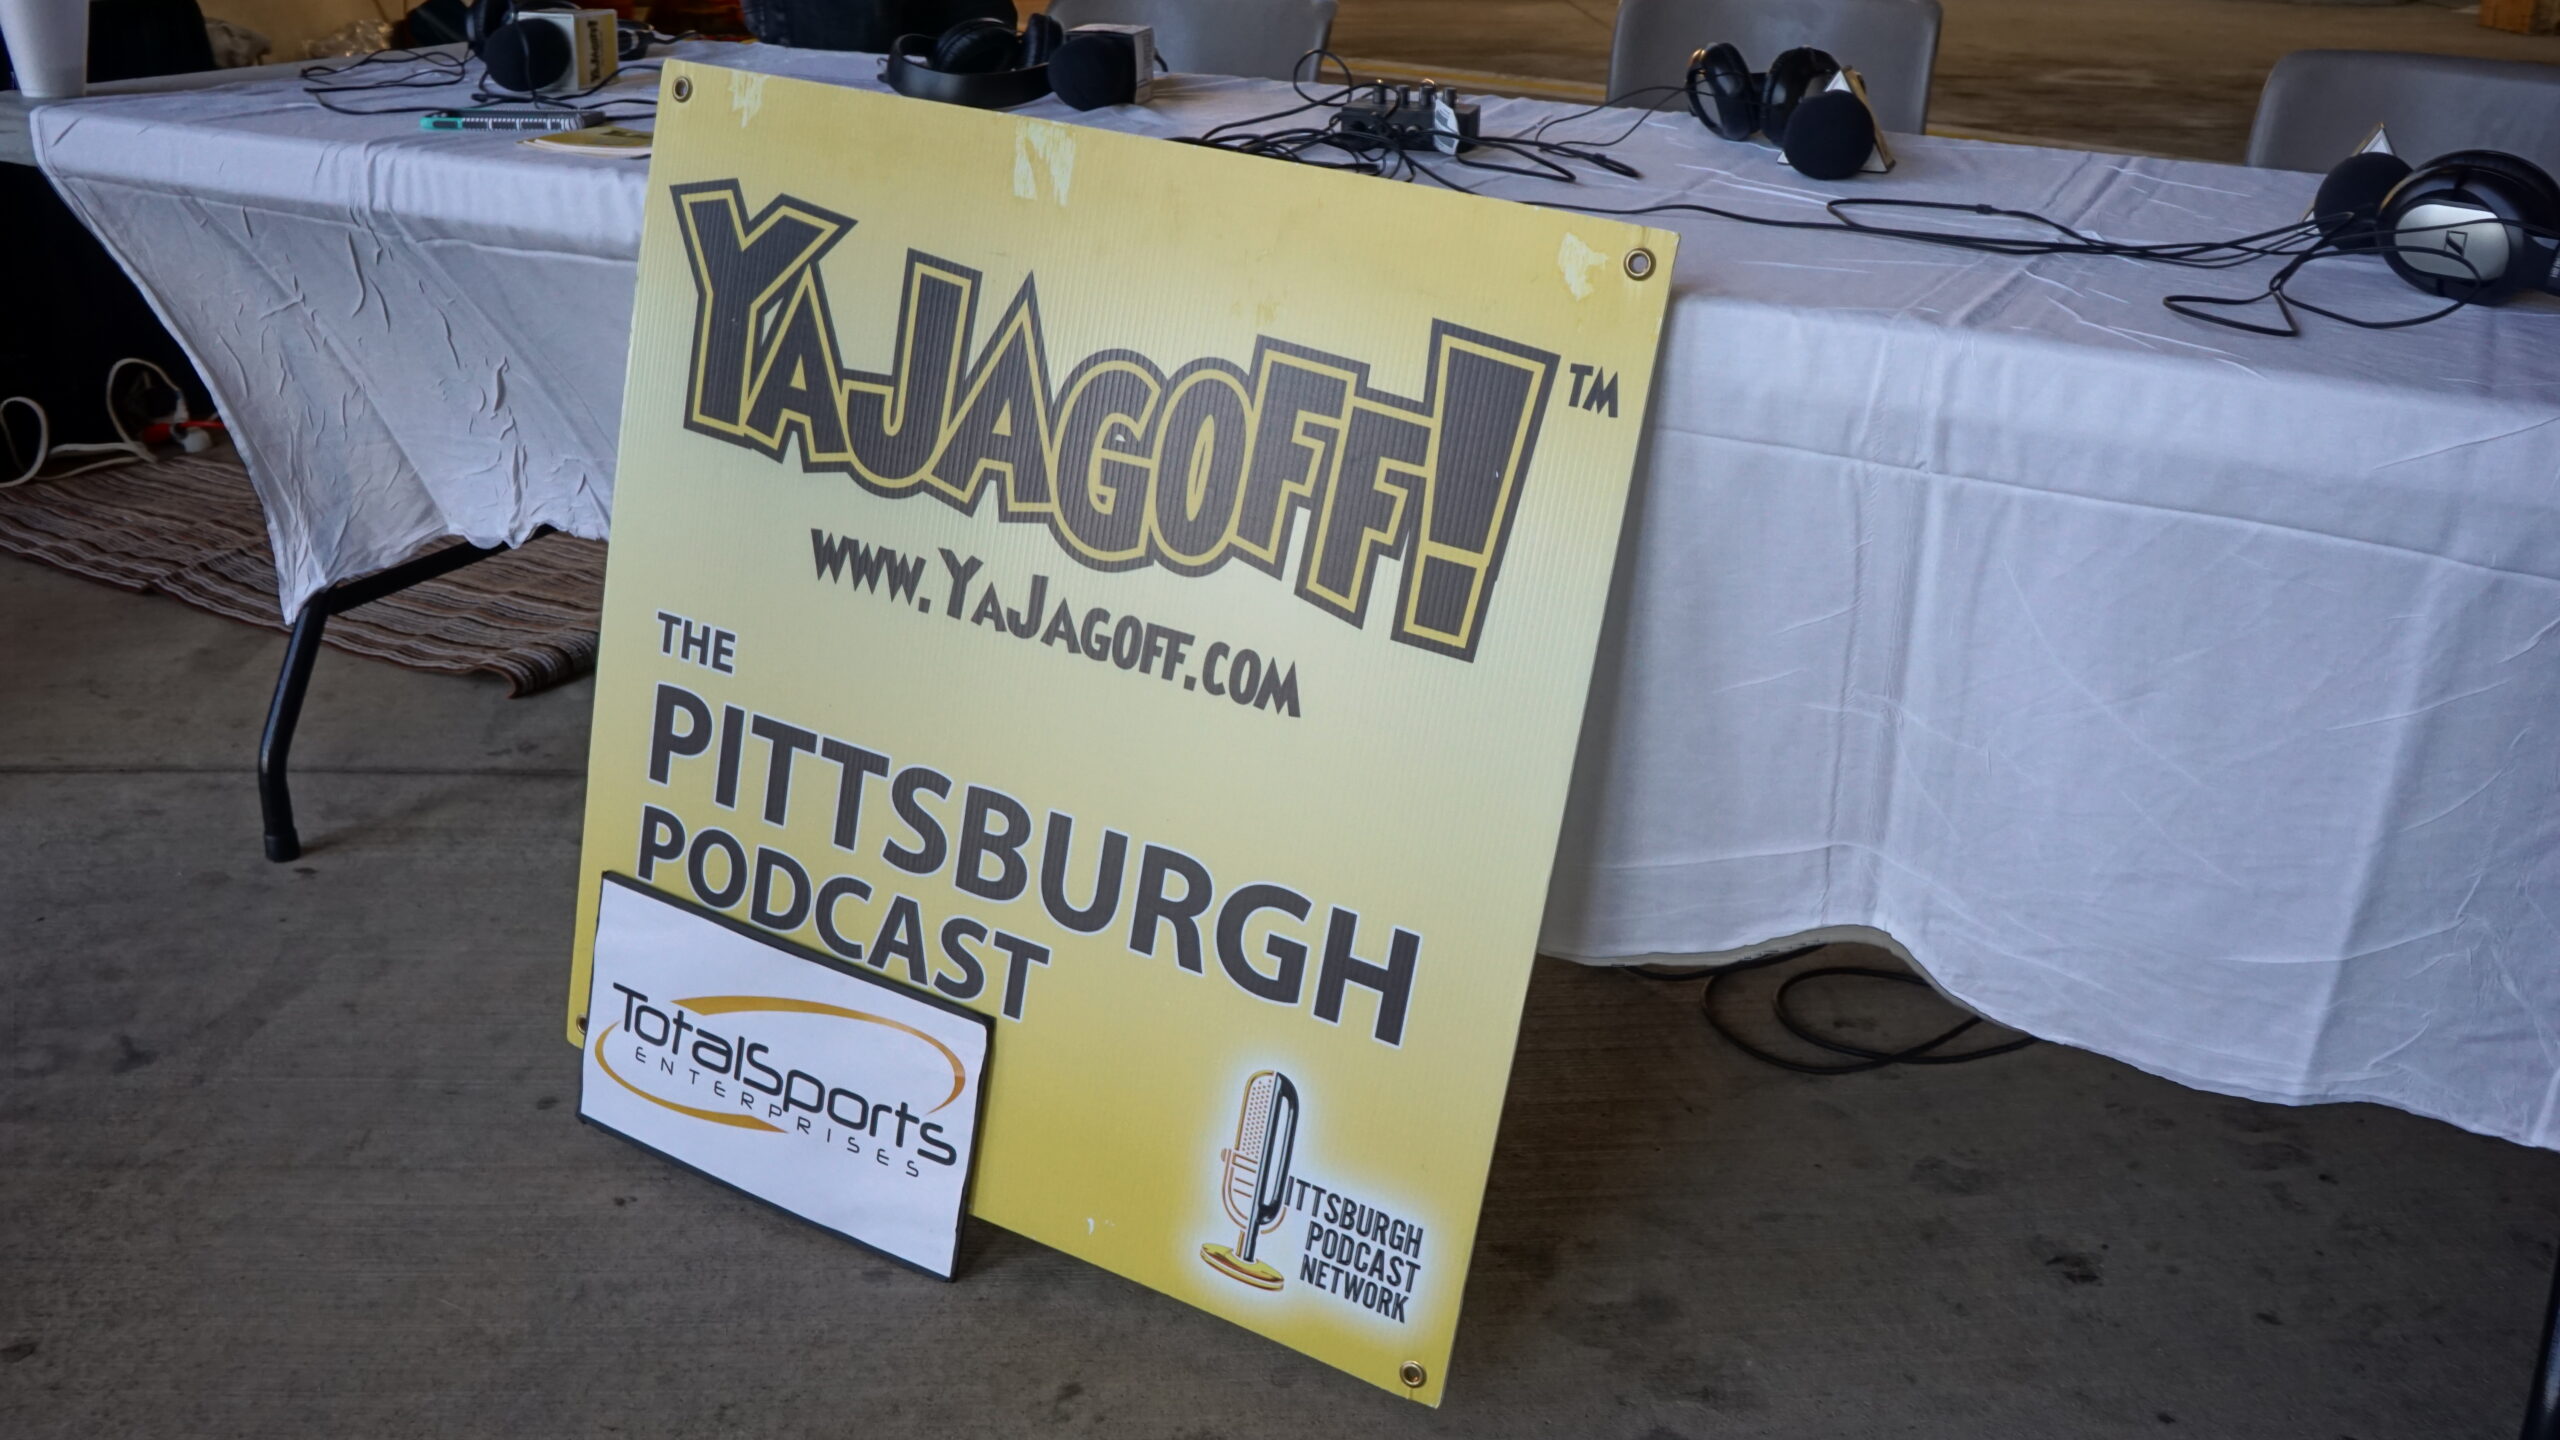 YaJagoff! recording podcast